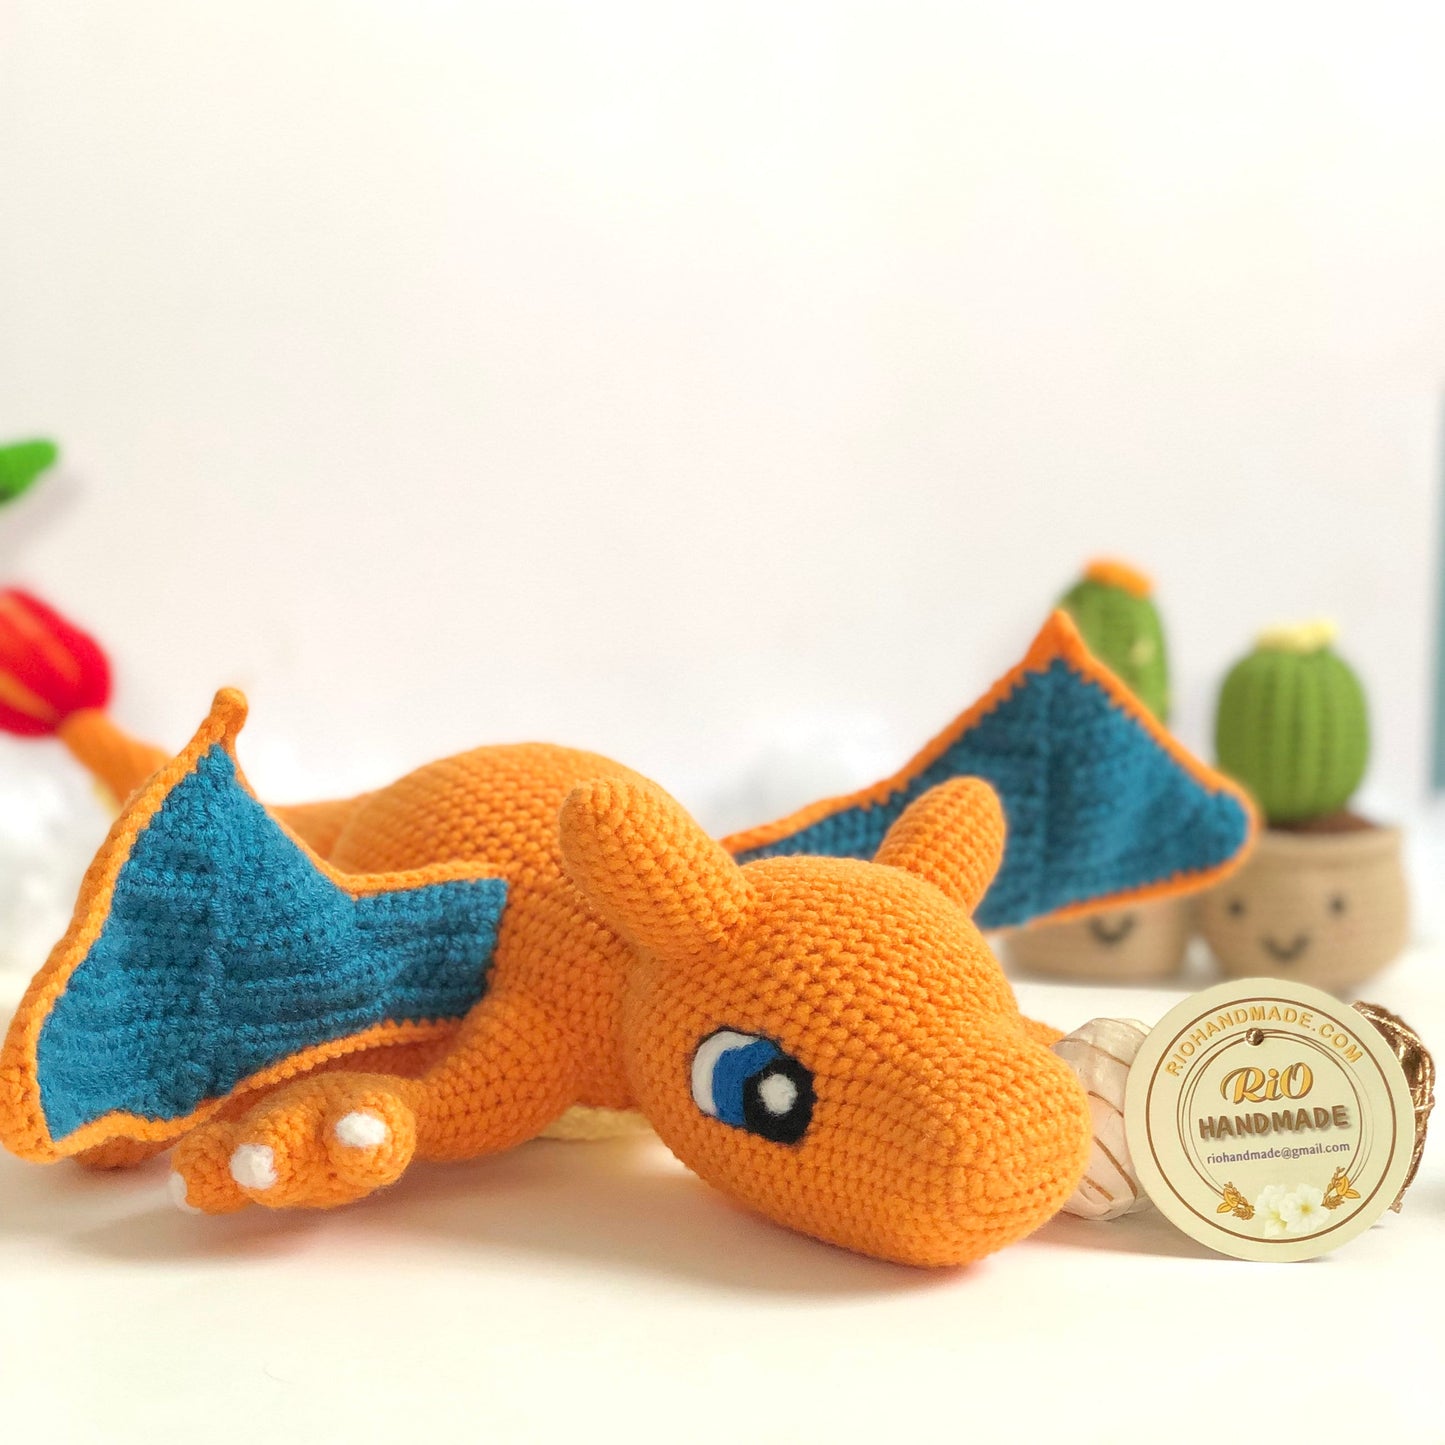 Handmade  Charizard Crochet, Inspired Pokemon, Amigurumi Toy, cute toy for kid, adult hobby